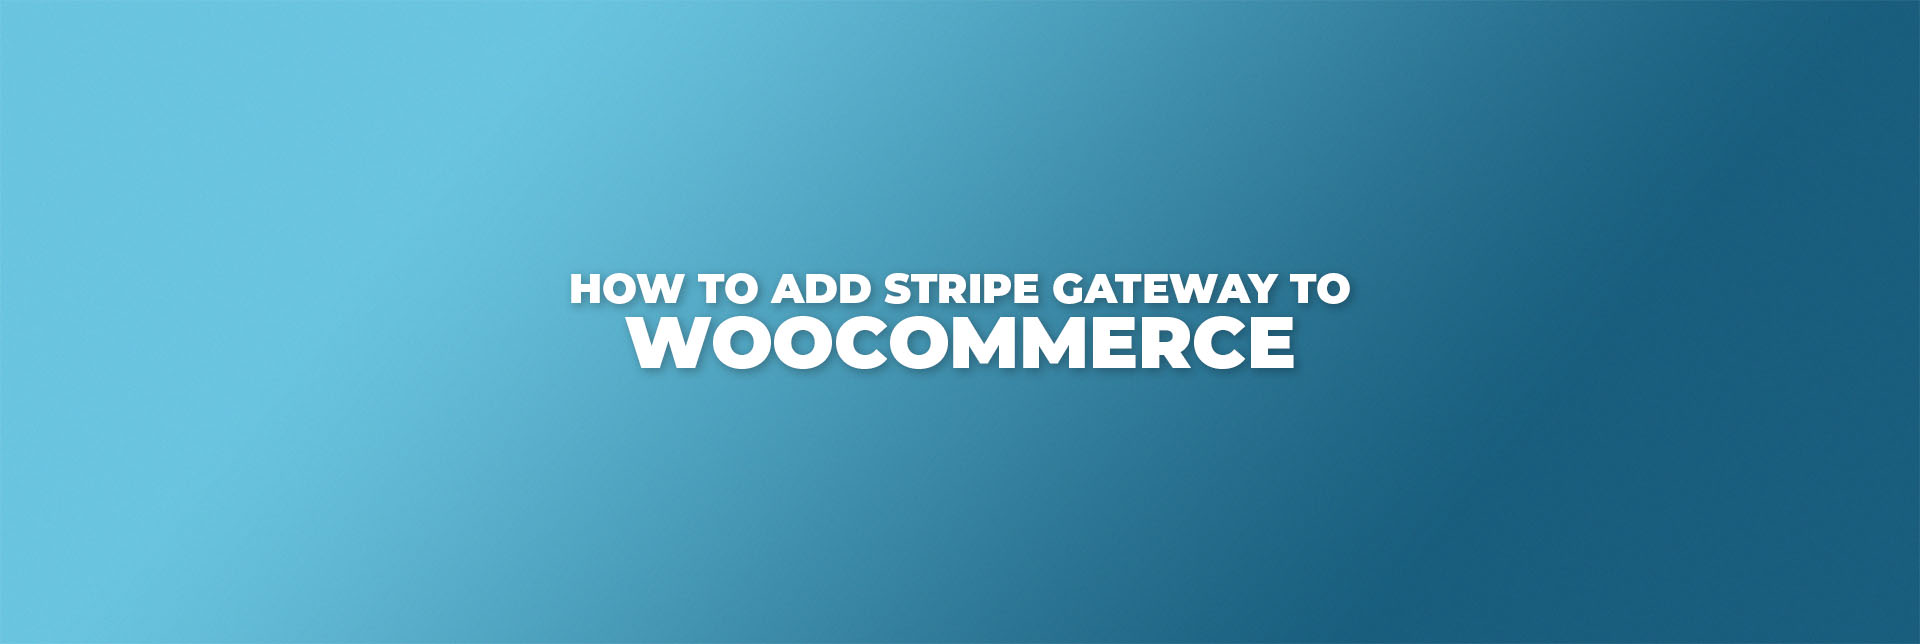 How to Add Stripe Gateway to WooCommerce